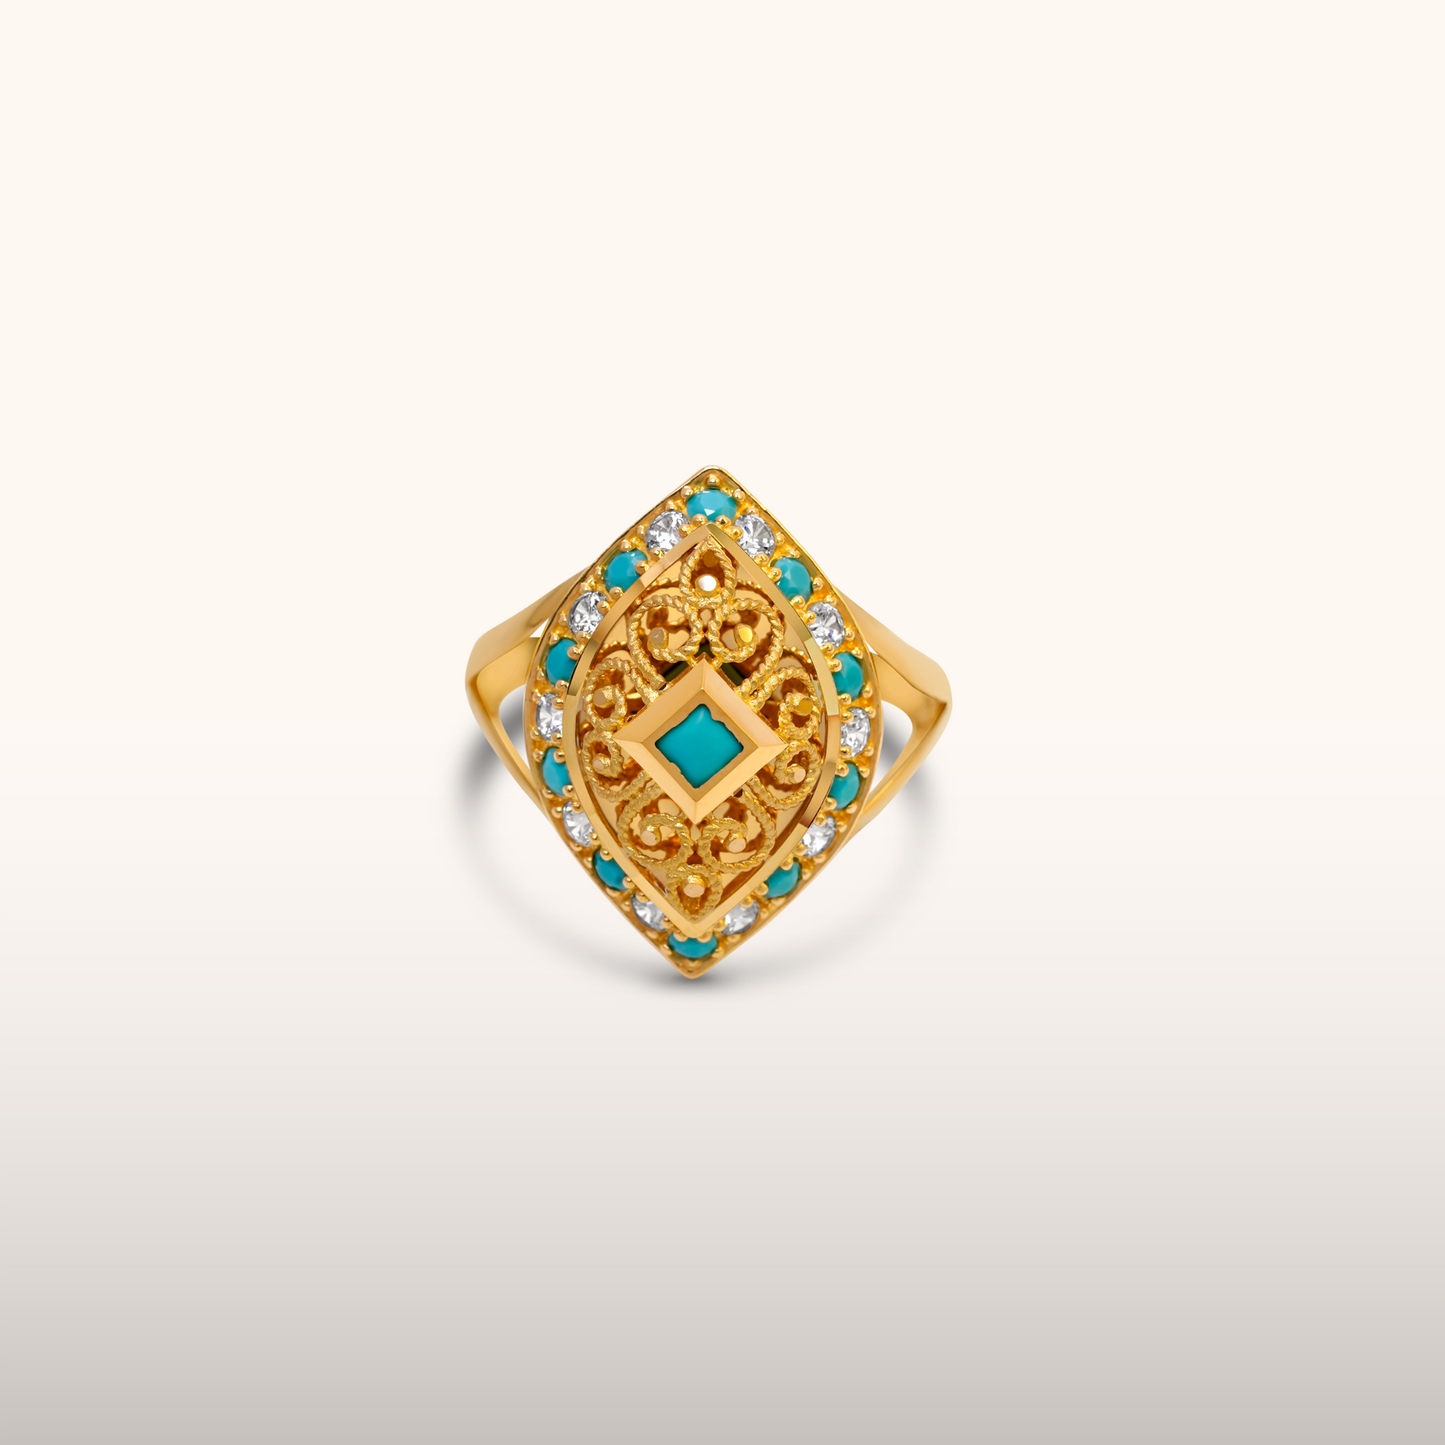 21K Ring - Turquoise & Diamonds